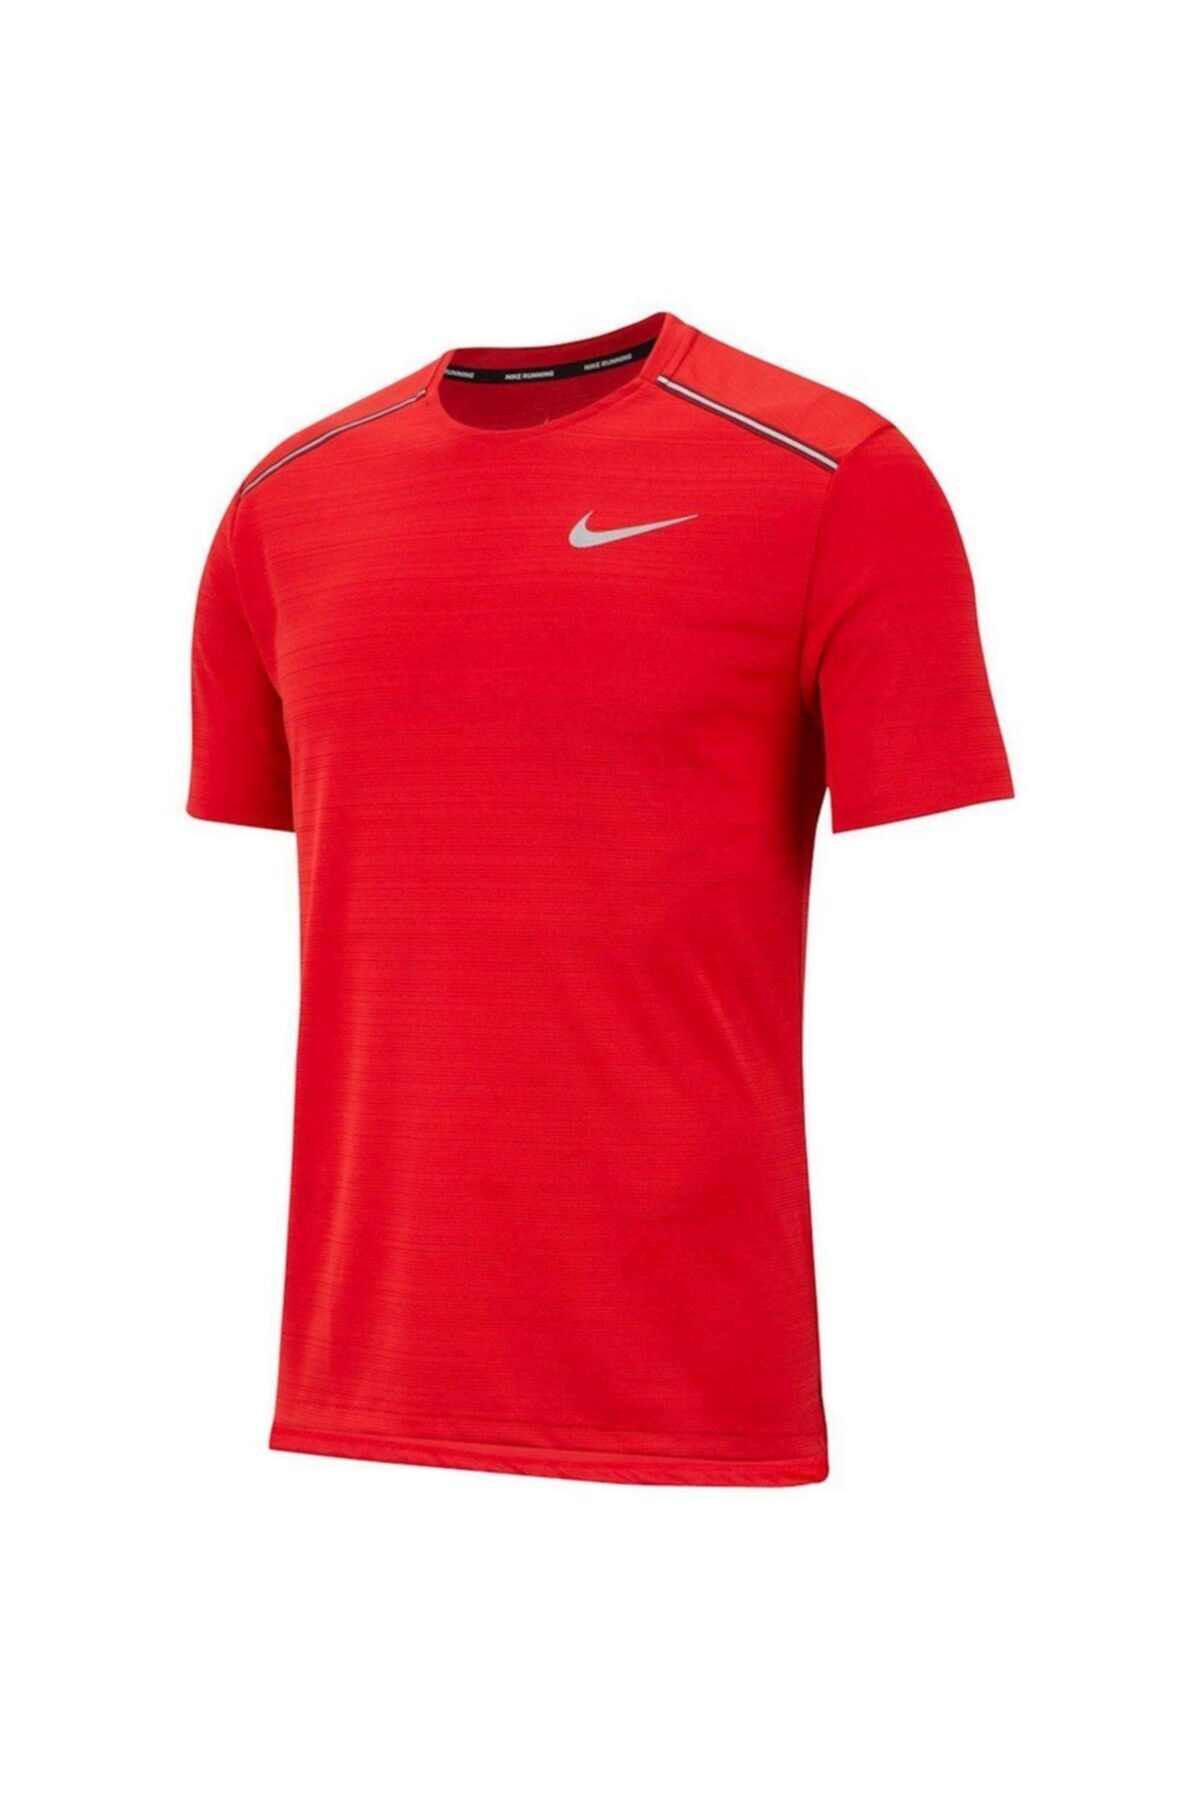 Nike Dry Miler Top Ss Erkek Spor T-Shirt